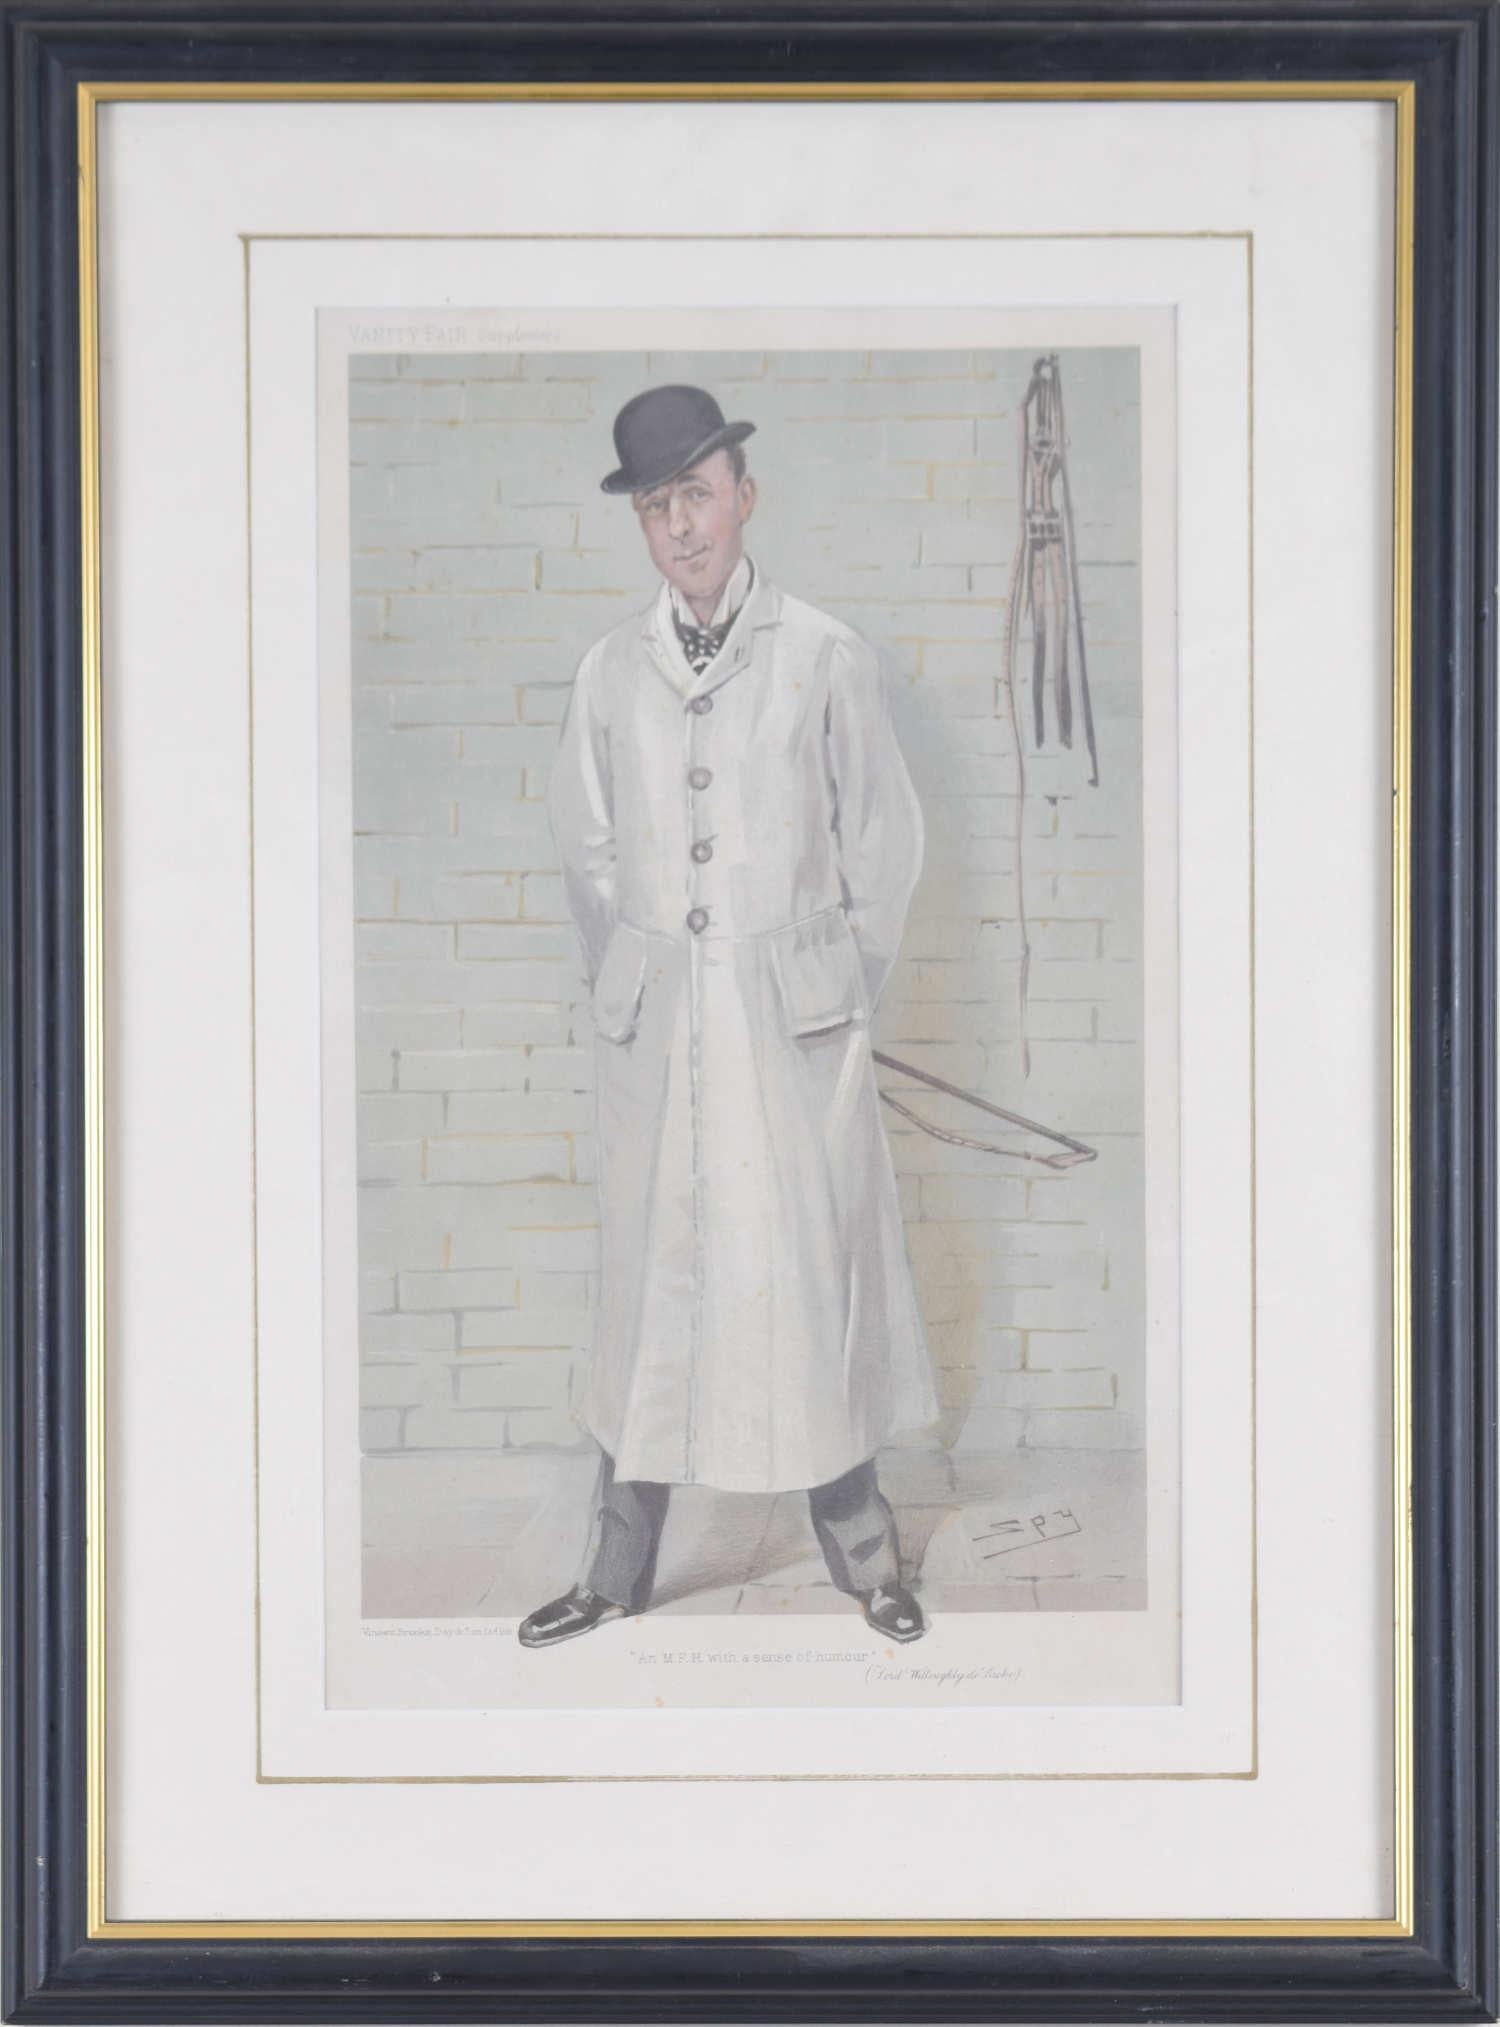 Sir Leslie « Spring » Ward : Carton de chasse de Vanity Fair «MFH with a sense of humour » - Victorien Art par Sir Leslie Ward